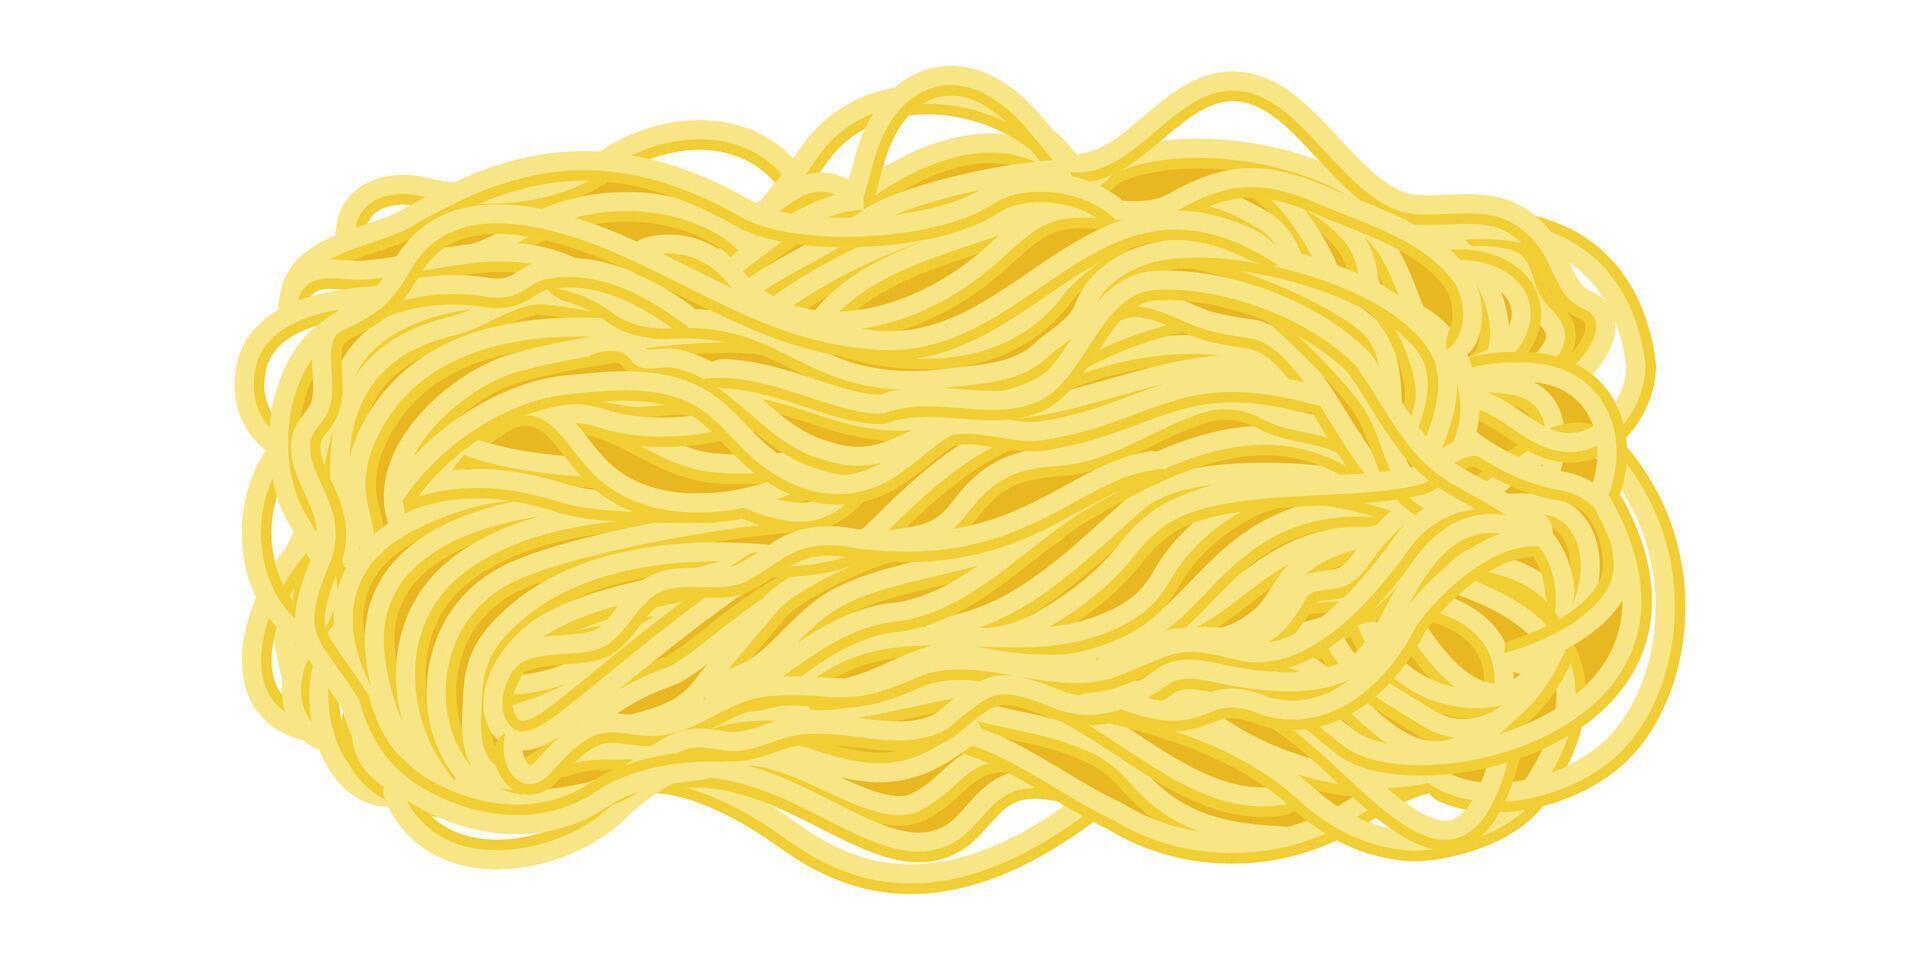 aislado amarillo ramen fideos. resumen modelo de italiano espaguetis pasta, macarrones. asiático alimento. vector